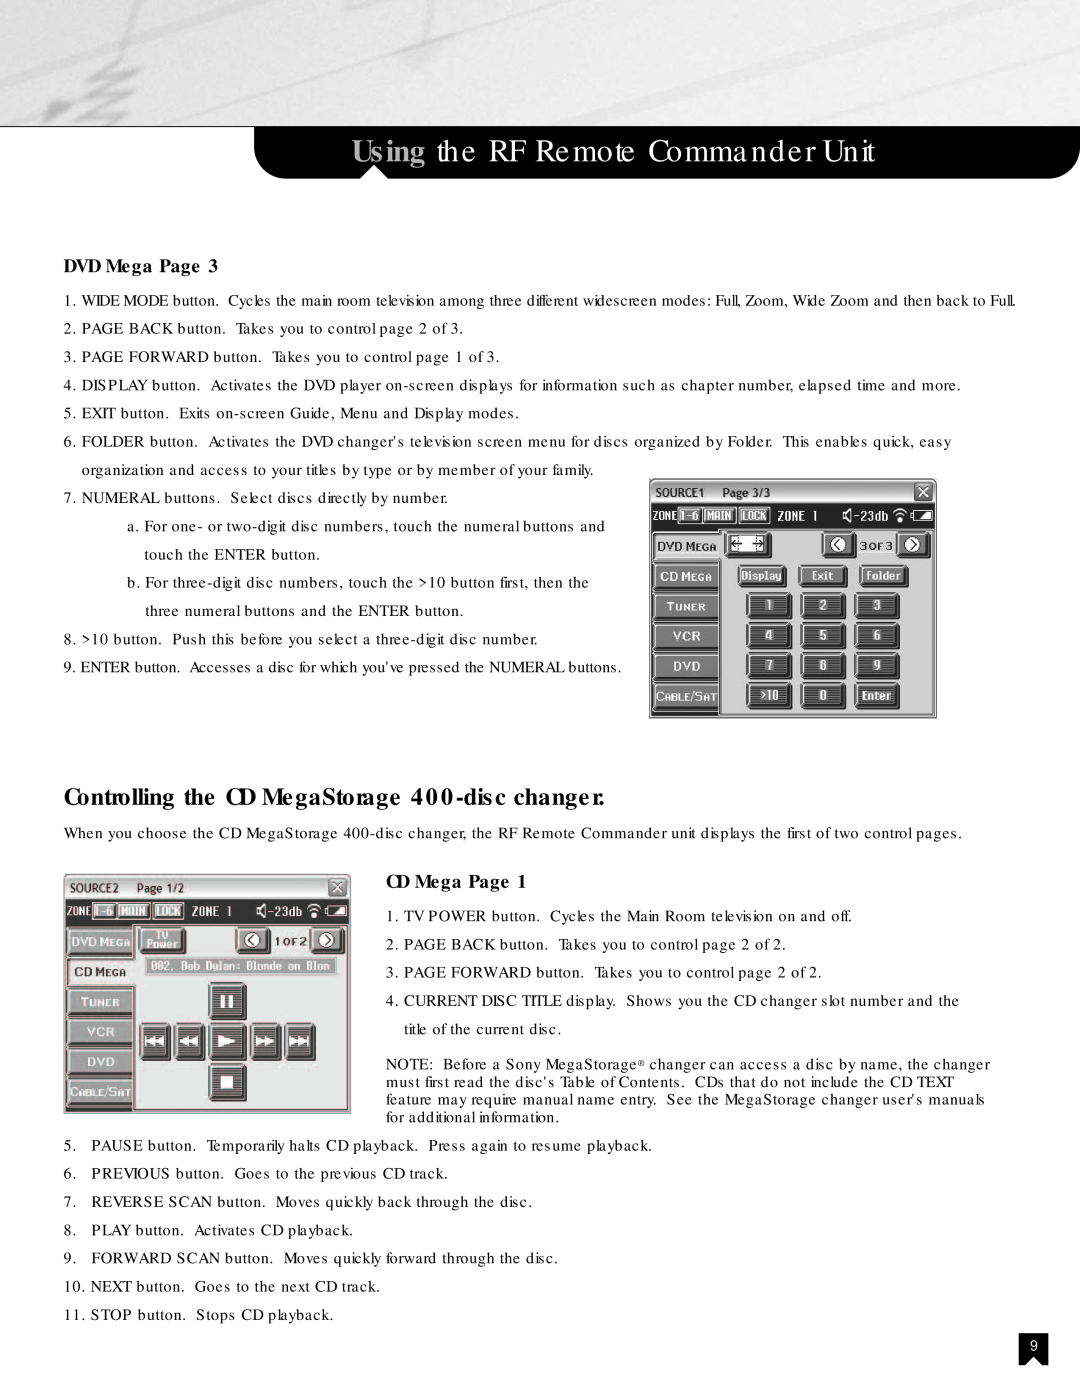 Sony NHS-2000 manual Controlling the CD MegaStorage 400-discchanger, CD Mega Page, Using the RF Remote Commander Unit 